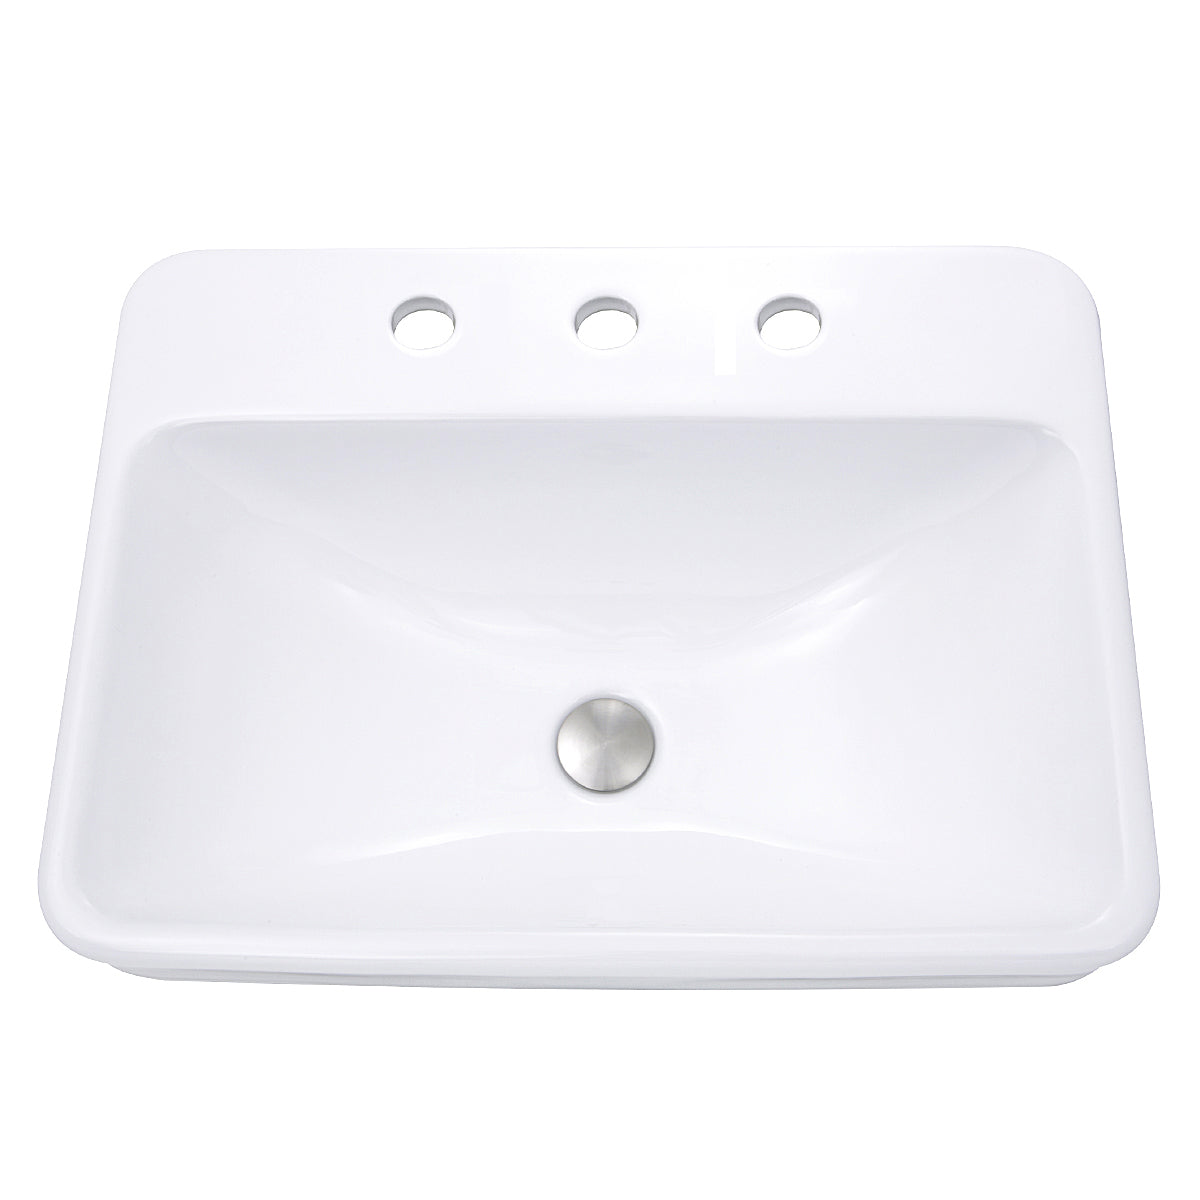 Nantucket Sinks 23 Inch 3-hole Rectangular Drop-In Ceramic Vanity Sink DI-2317-R8